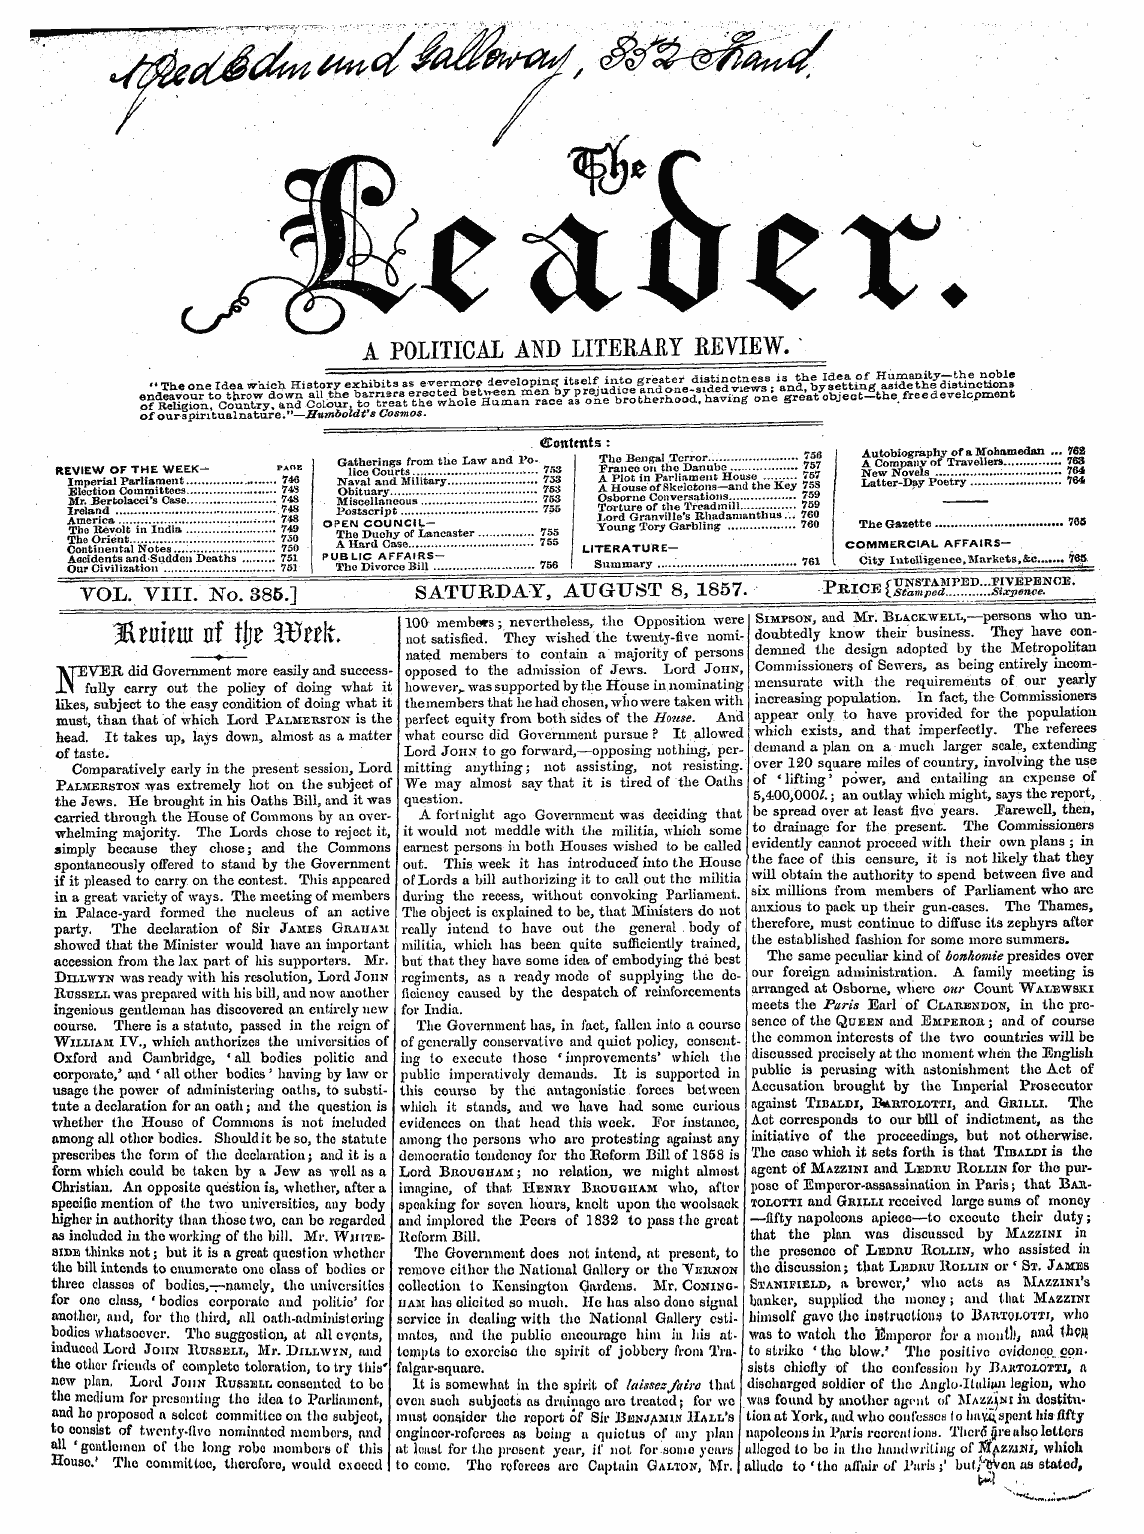 Leader (1850-1860): jS F Y, 2nd edition - Vol. Viii. No. 386.1 Saturday, August 8,...